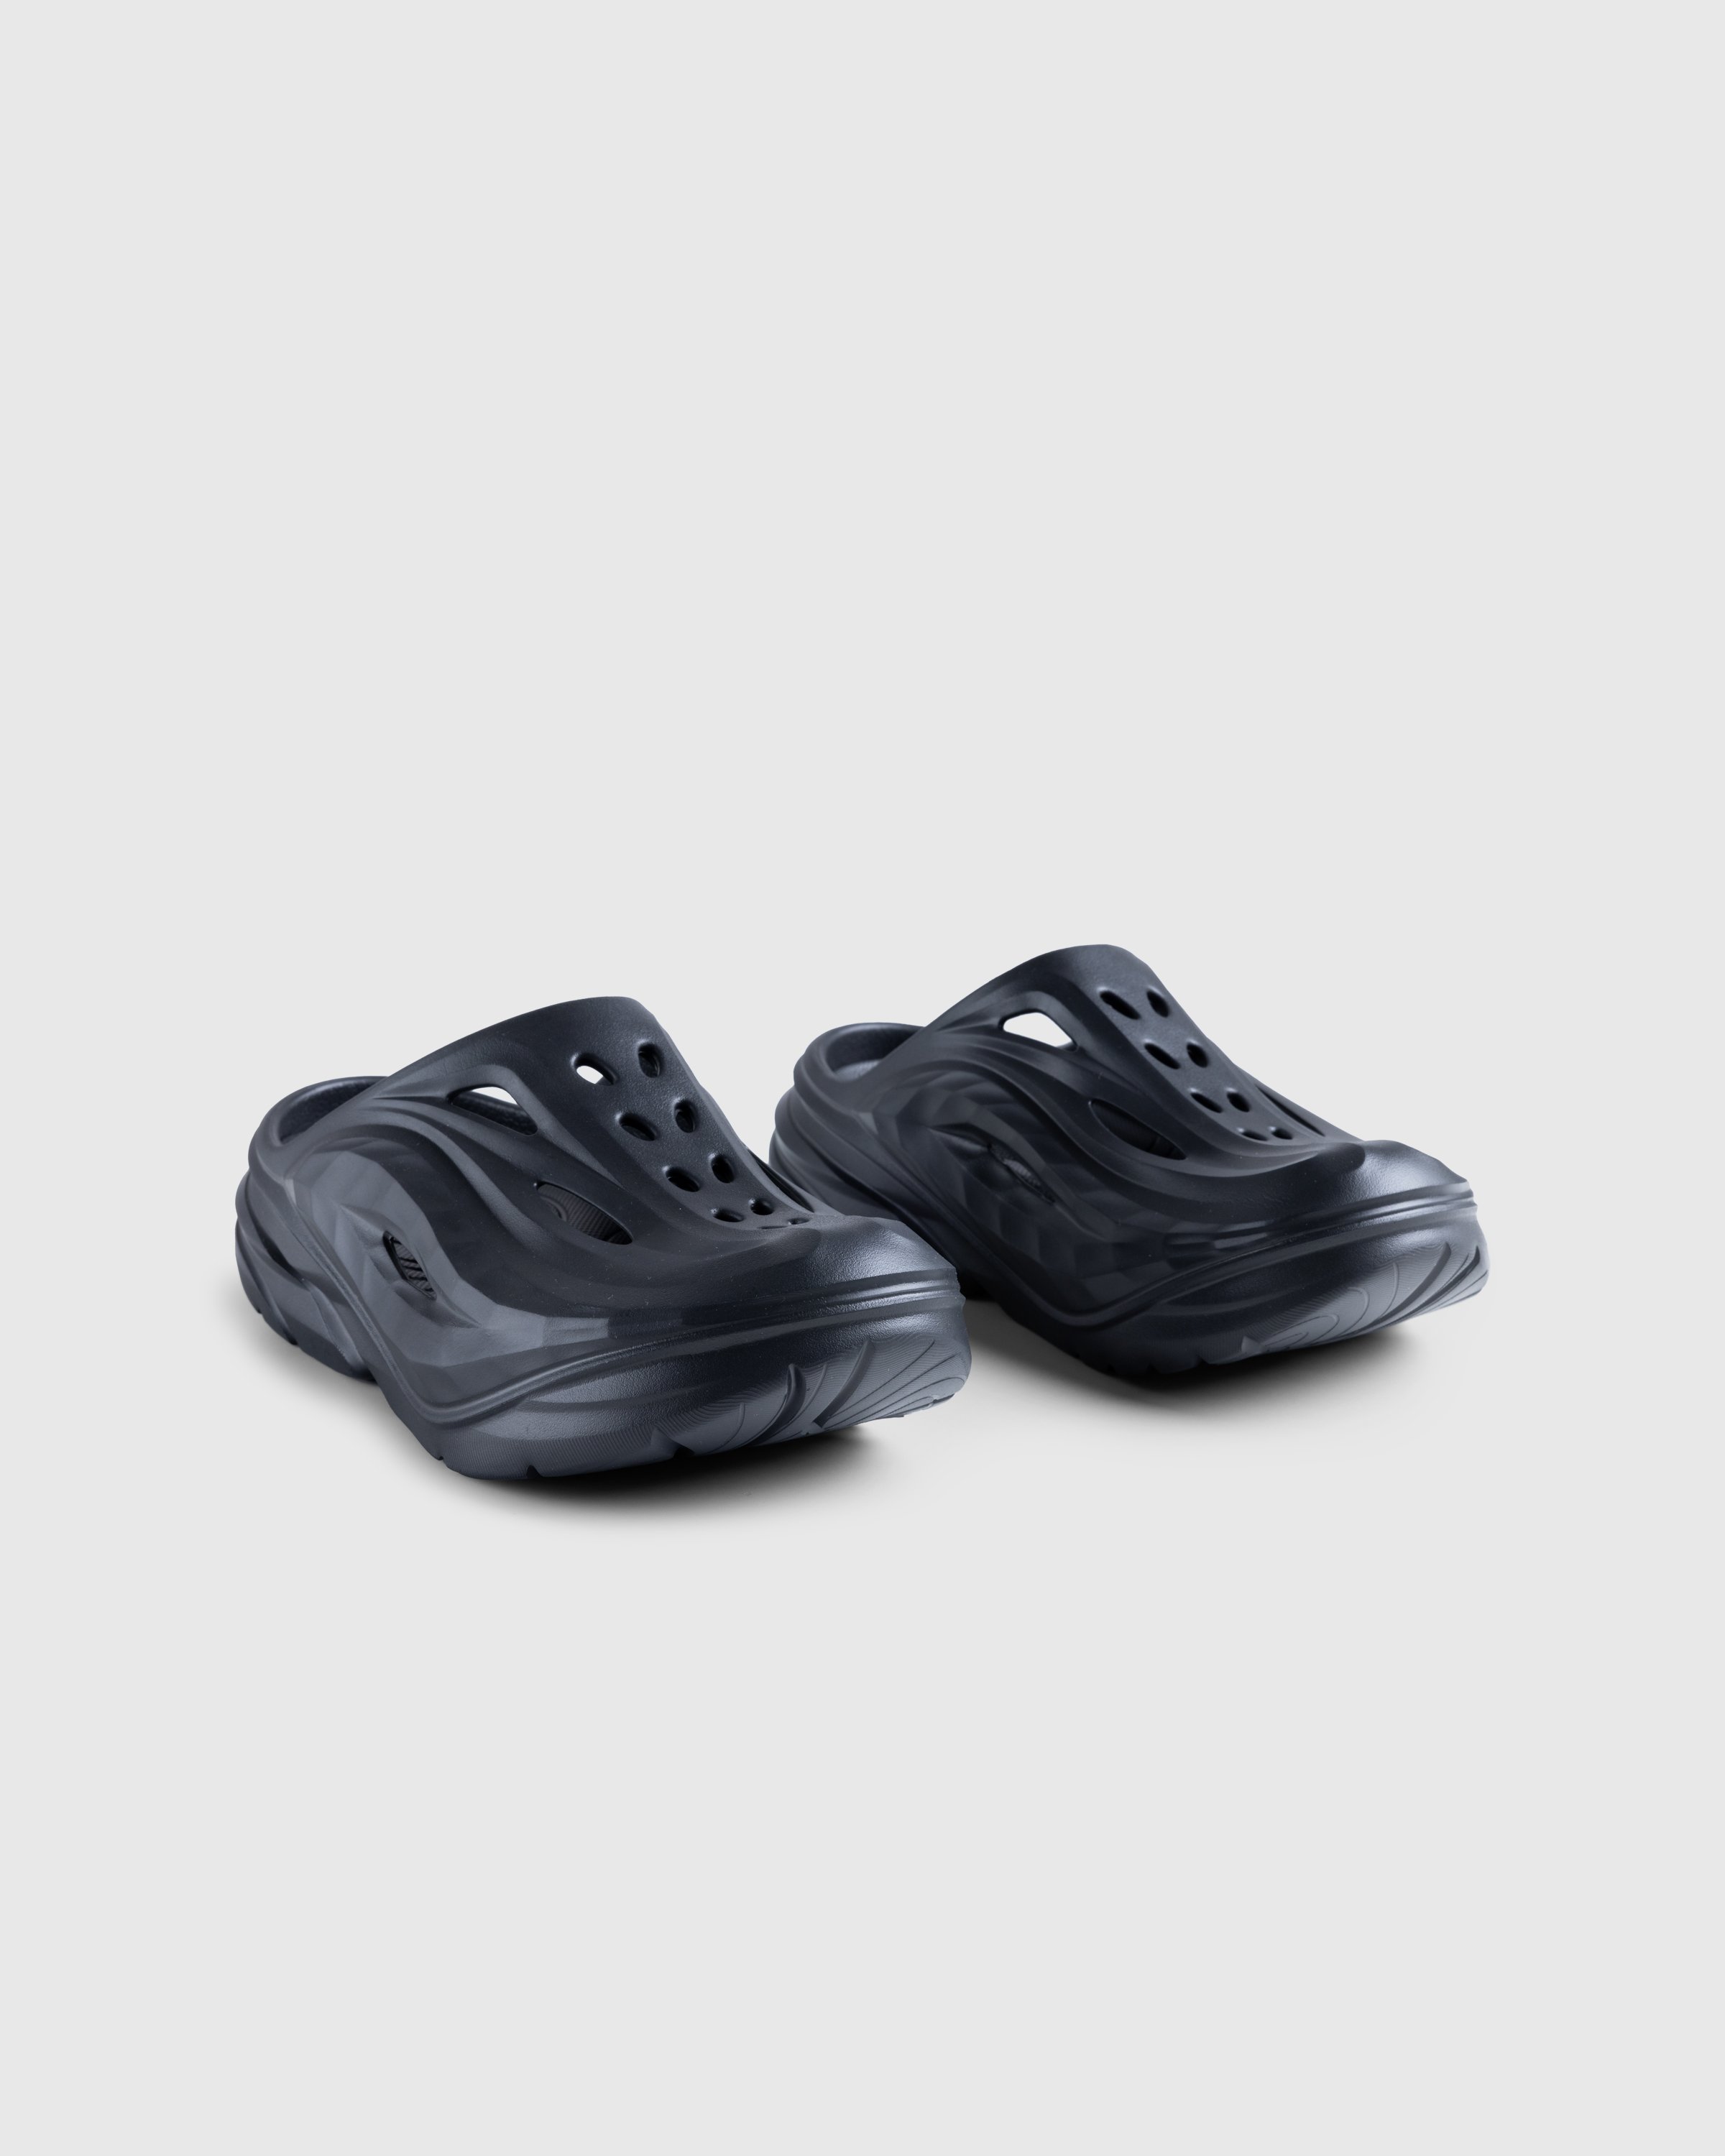 HOKA - W ORA RECOVERY MULE - Footwear - Black - Image 3